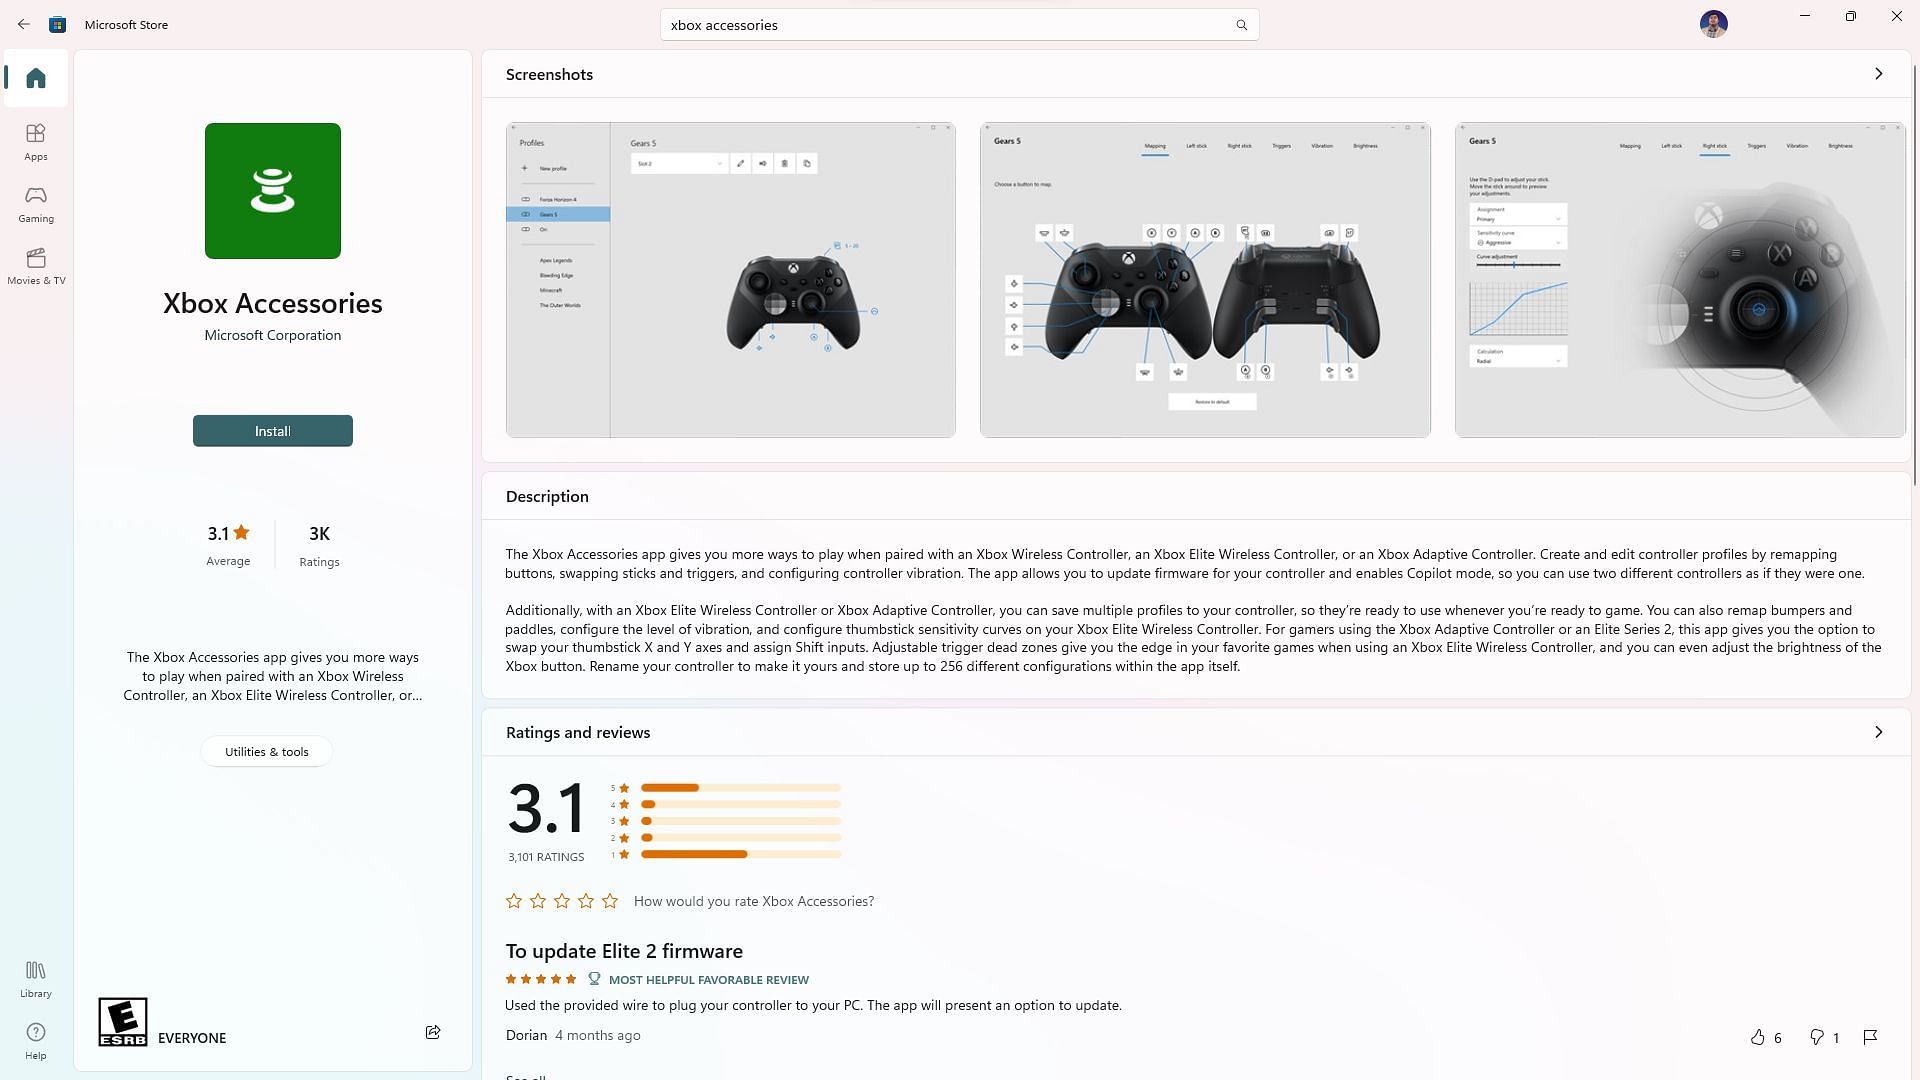 The Xbox Accessories app download page in Microsoft Store (Image via Sportskeeda)